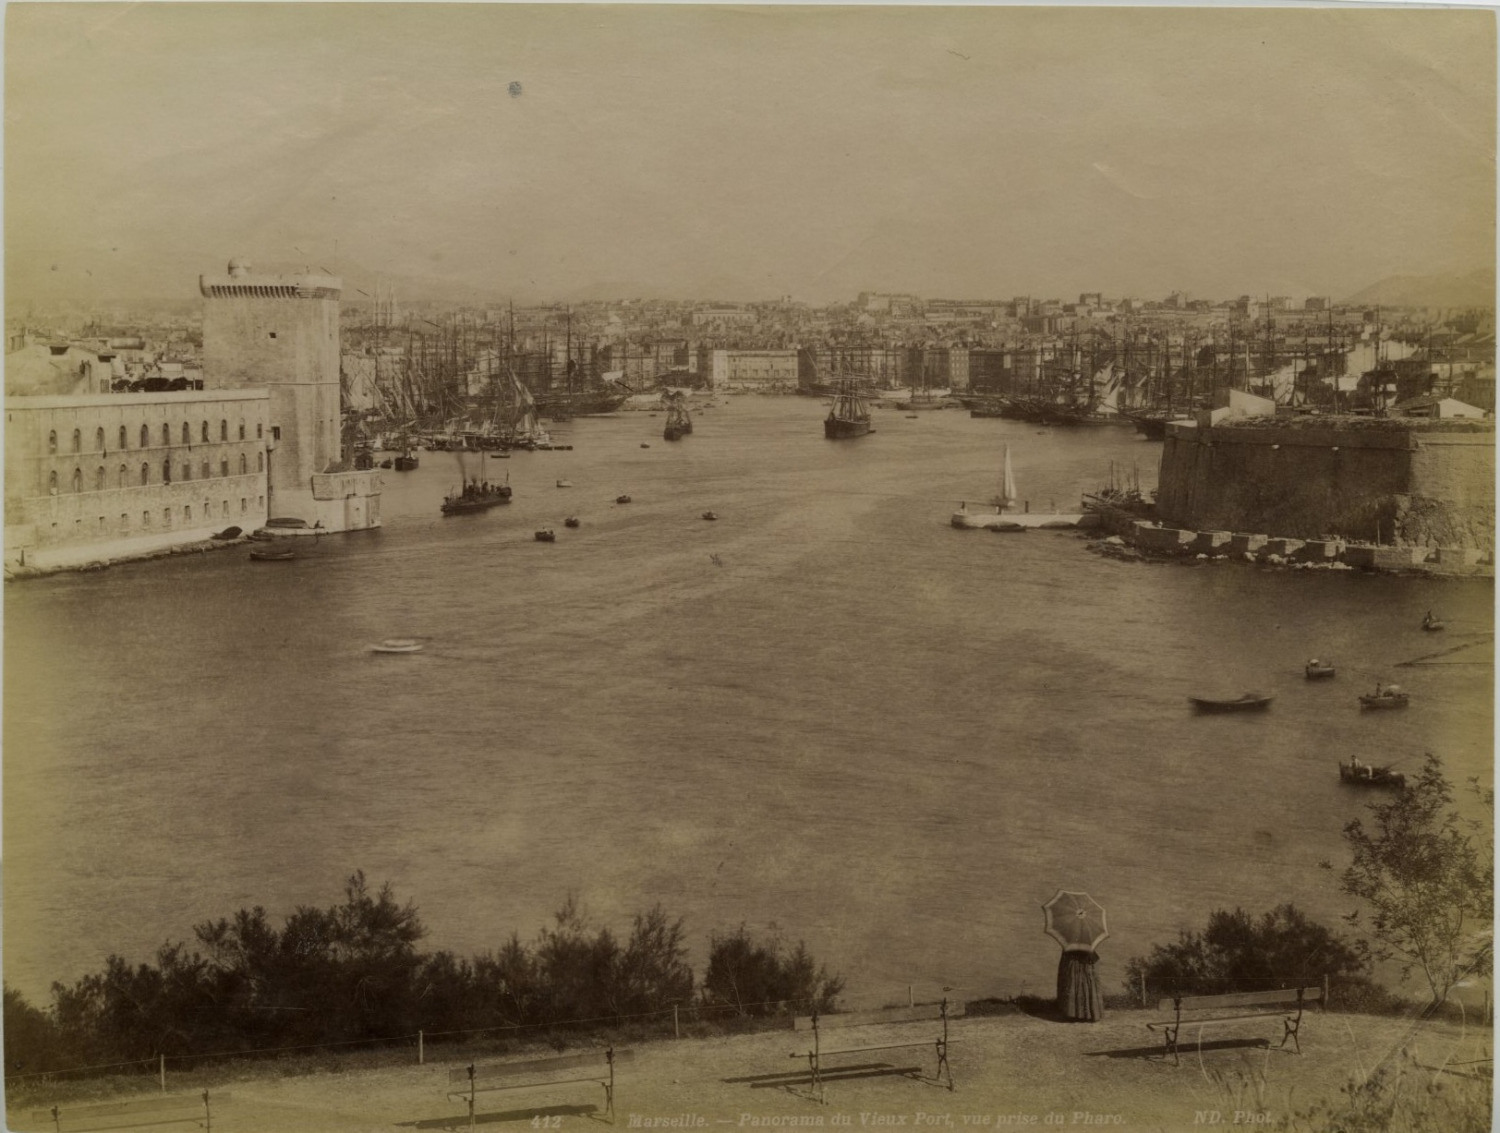 N.D. France, Marseille, panorama of the Old Port vintage albumen print, France T